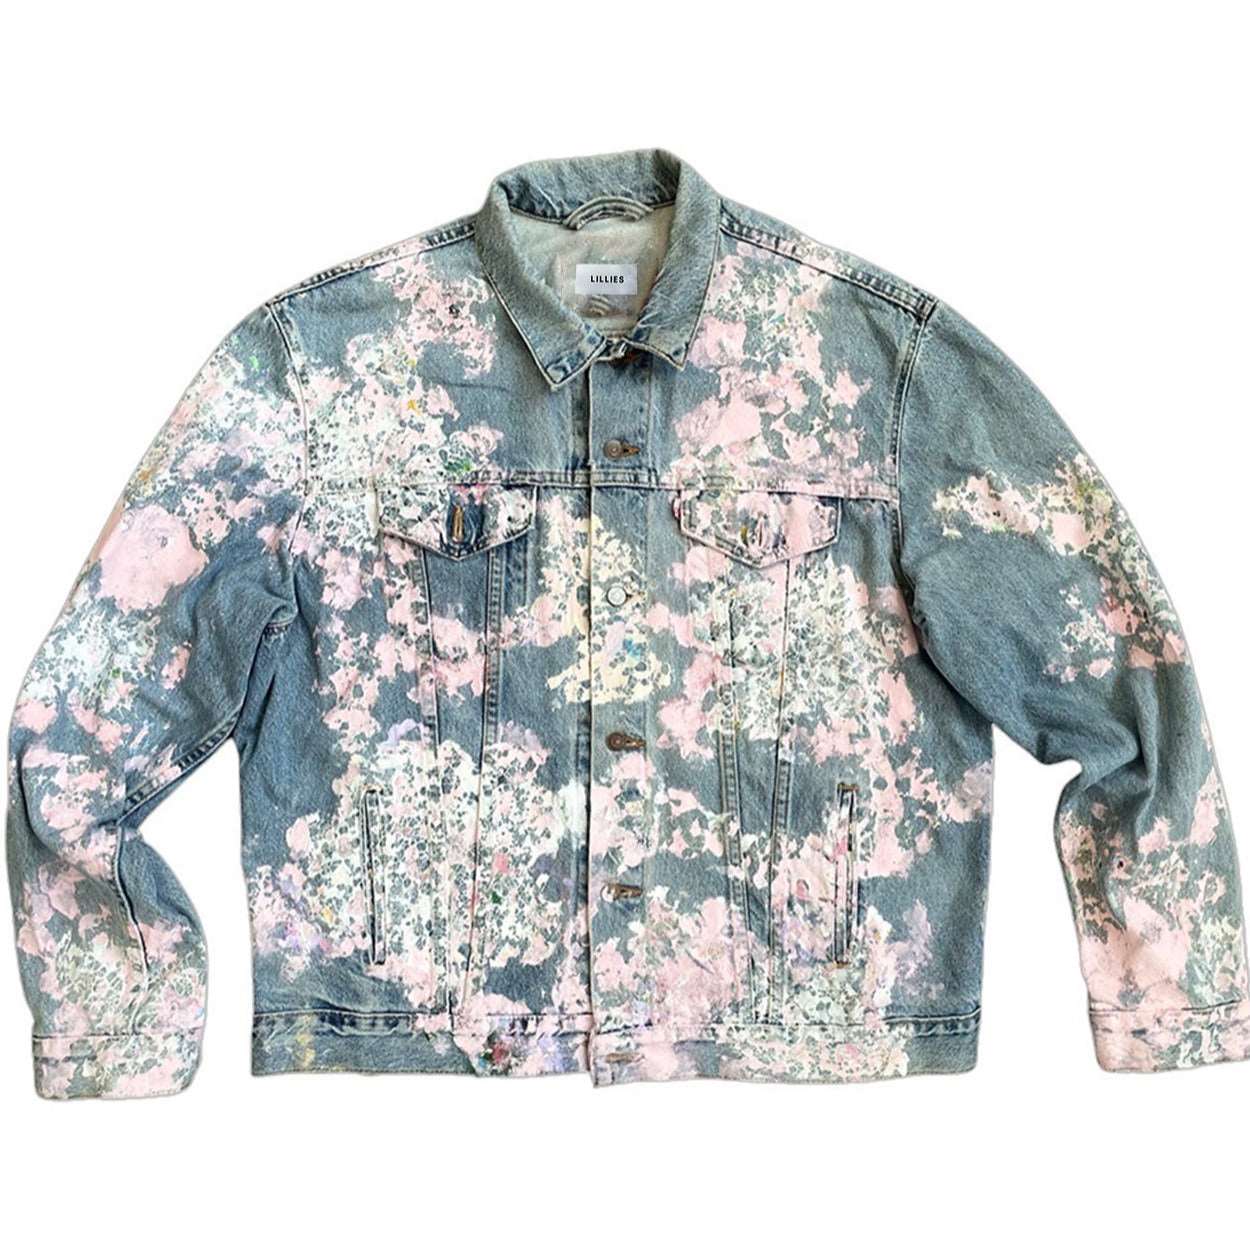 The Lily Jacket hand painted jacket oversize unisex handcraft markings light pink color vintage denim